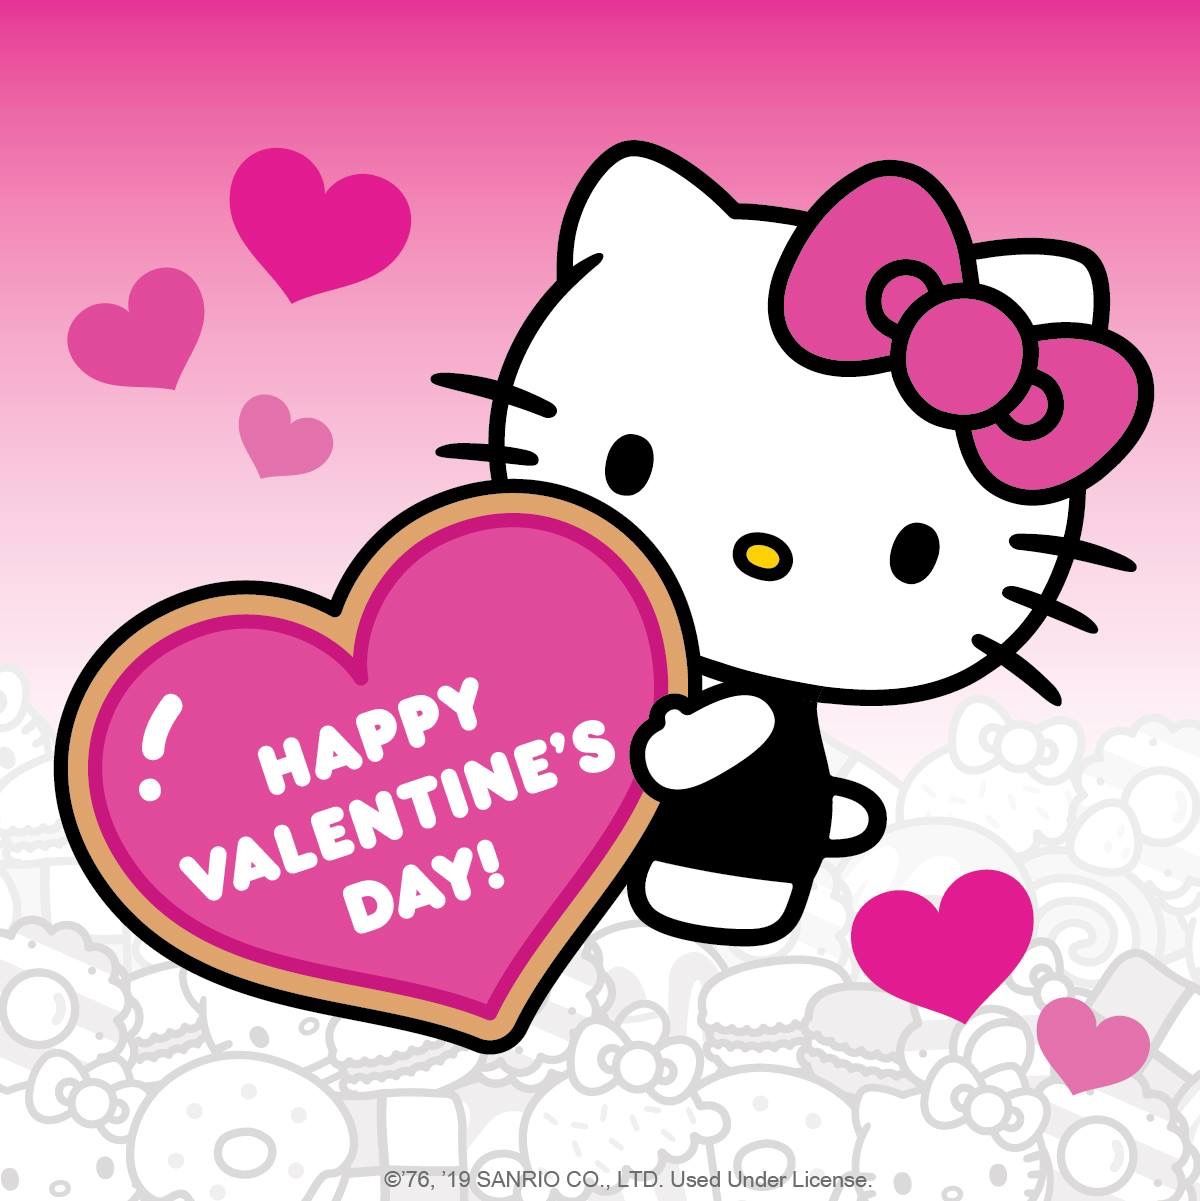 Happy valentines day sanrio hello kitty hello kitty hello kitty backgrounds